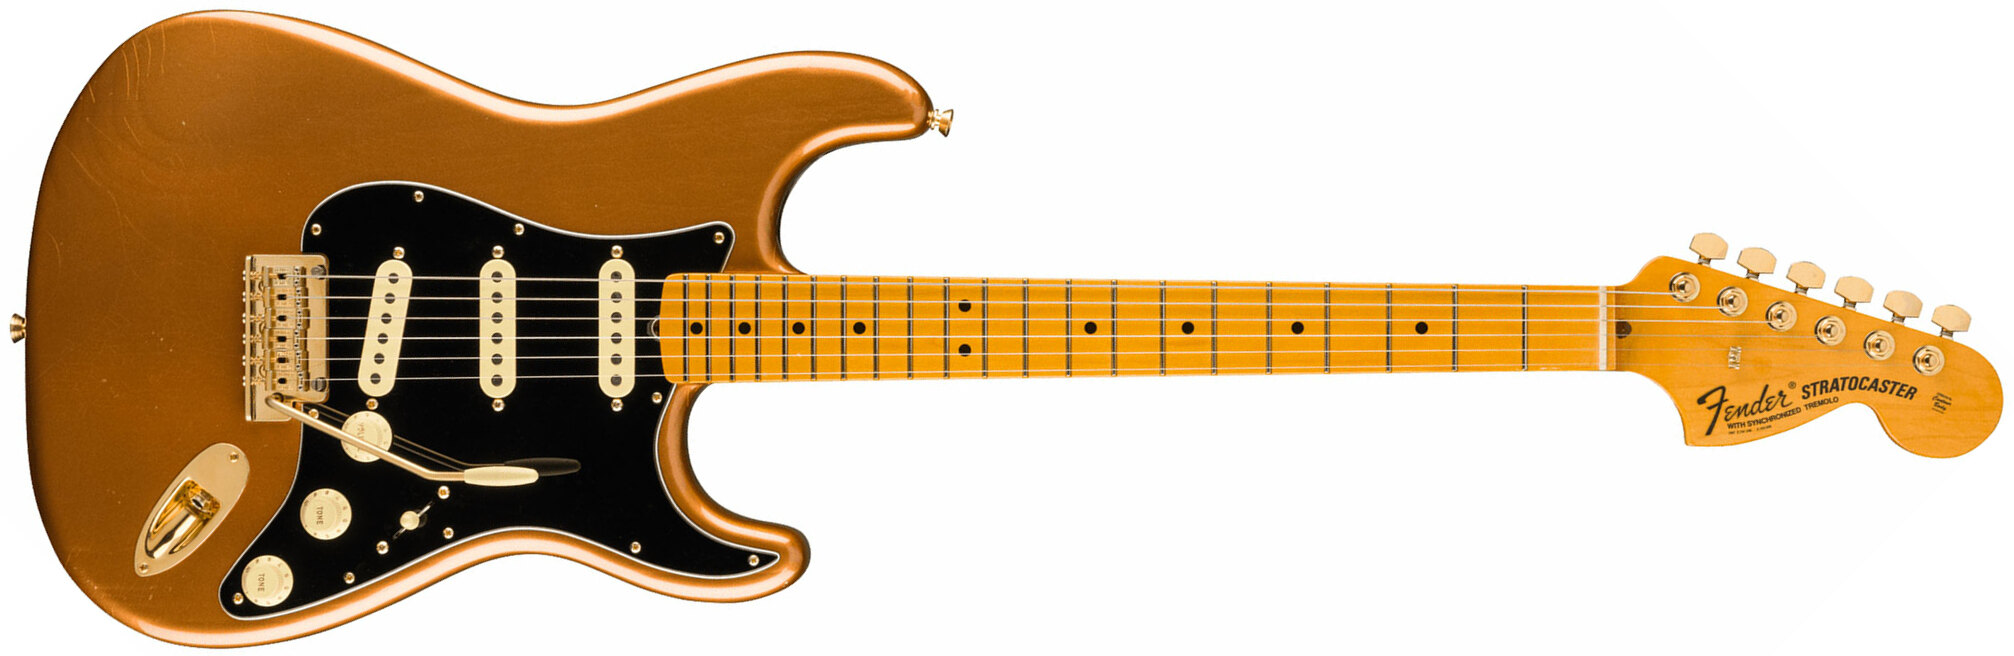 Fender Bruno Mars Strat Usa Signature 3s Trem Mn - Mars Mocha - Guitarra eléctrica de autor - Main picture